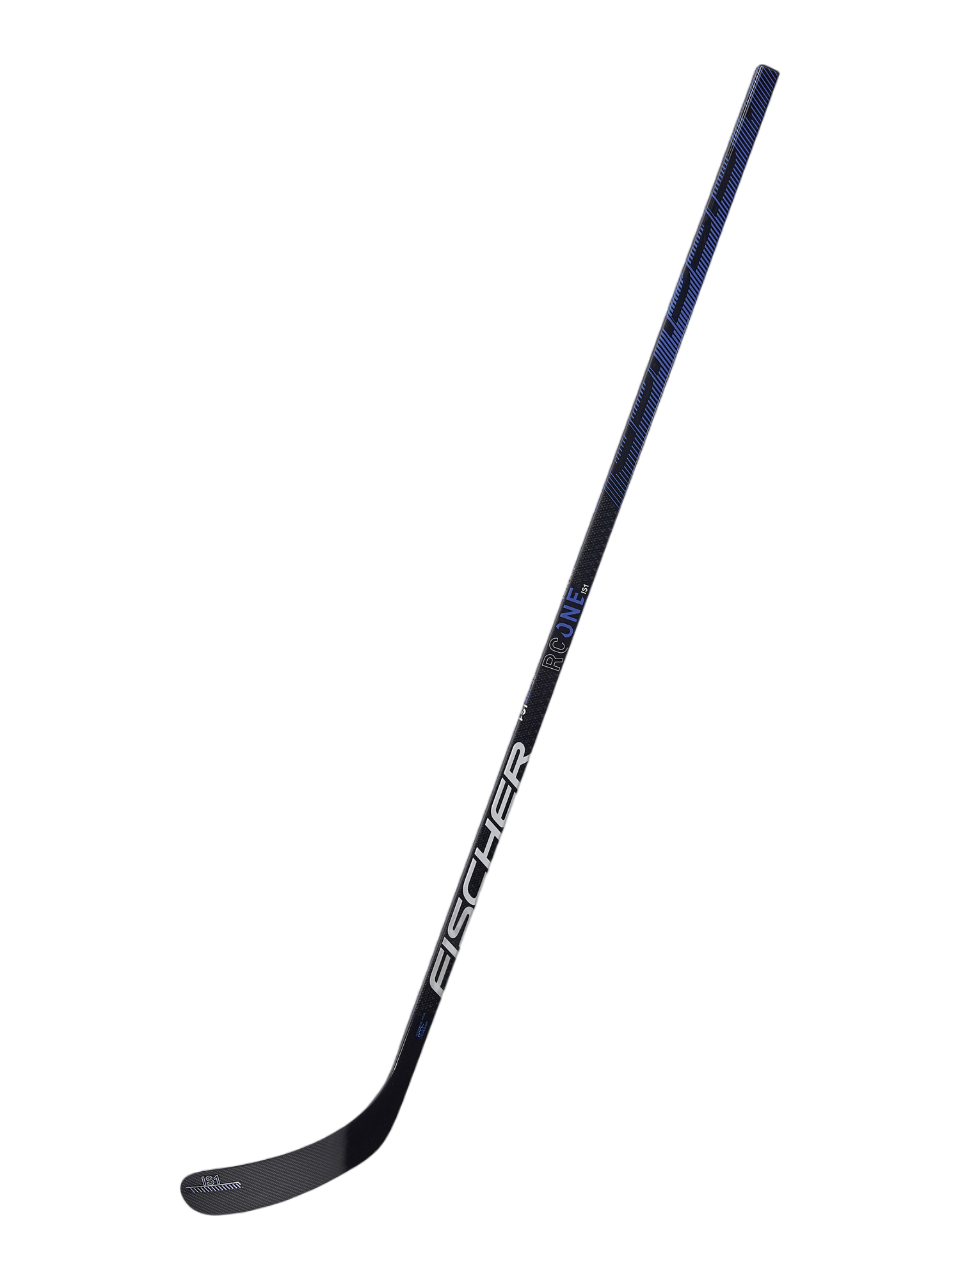 Клюшка хоккейная Fischer RC ONE IS1 SR 59" L92 080 для взрослых левый хват правый загиб